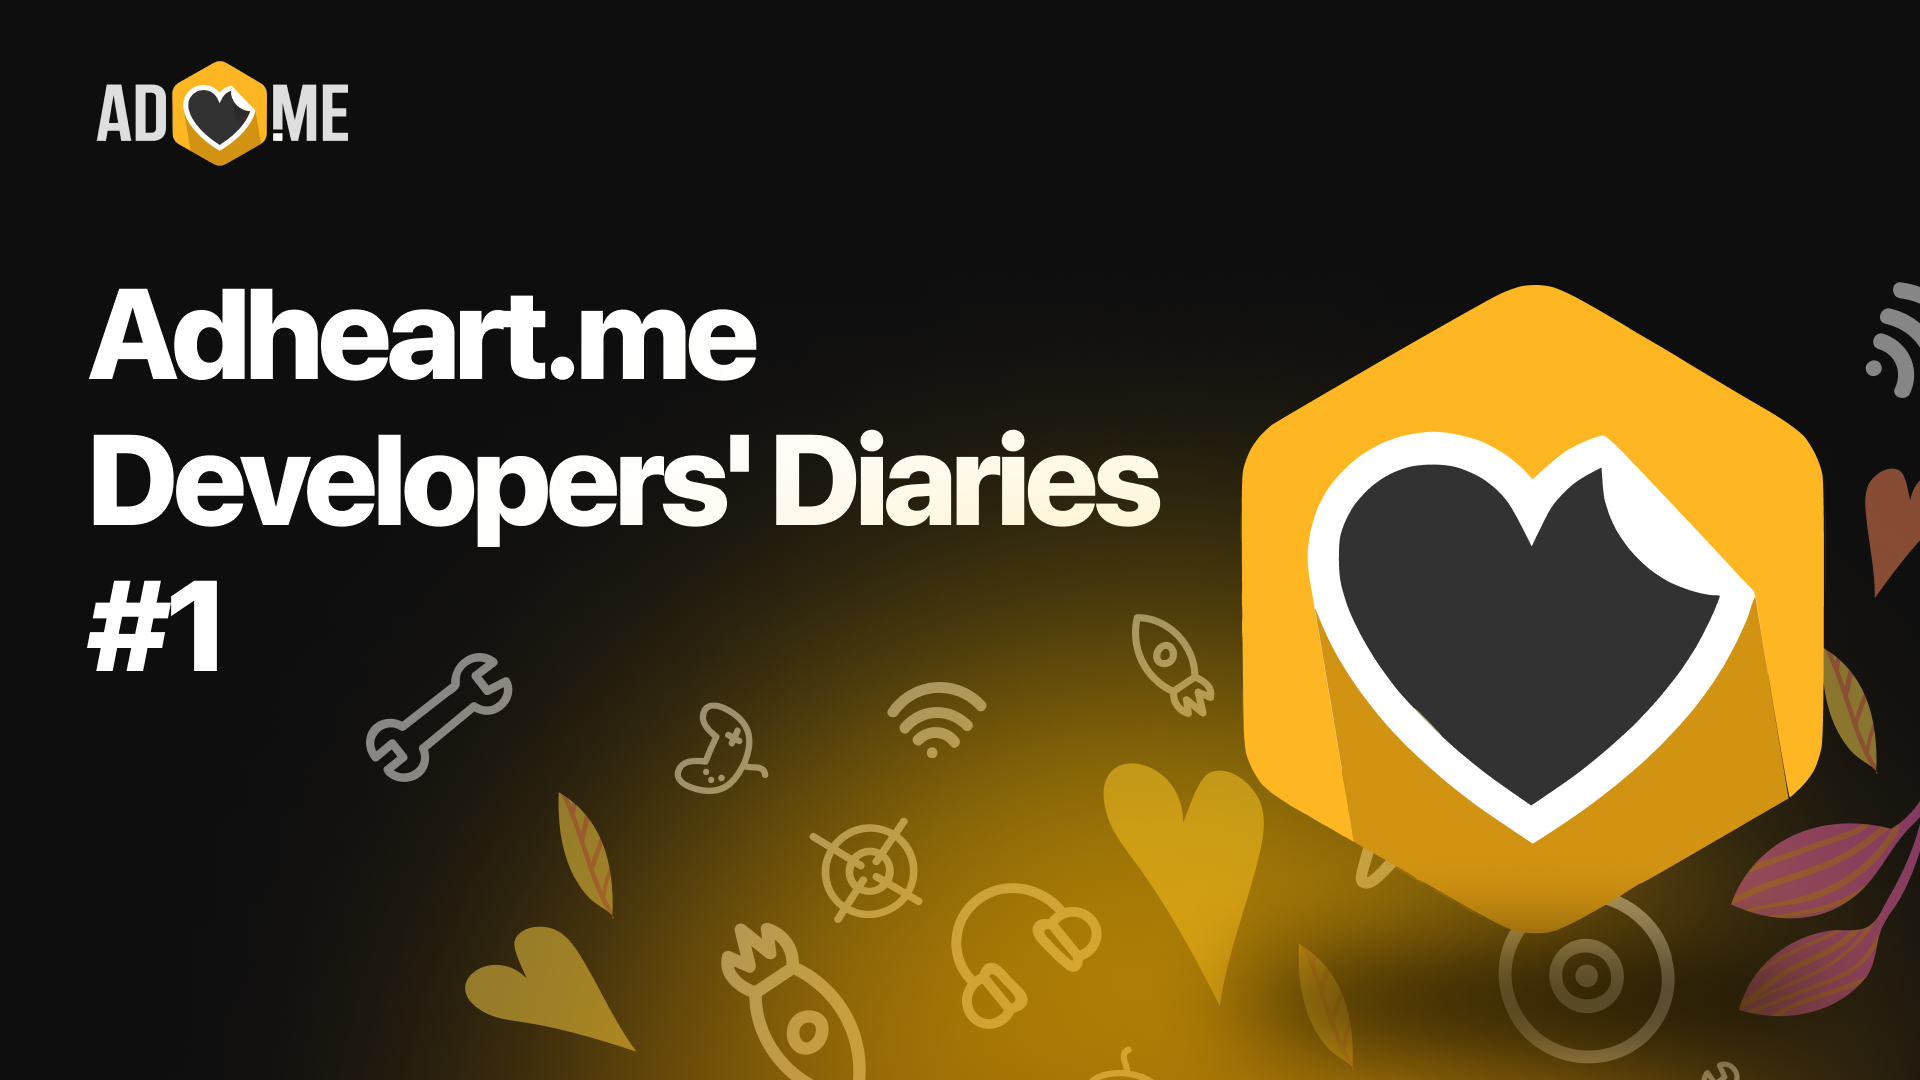 Adheart.me Developers' Diaries #1